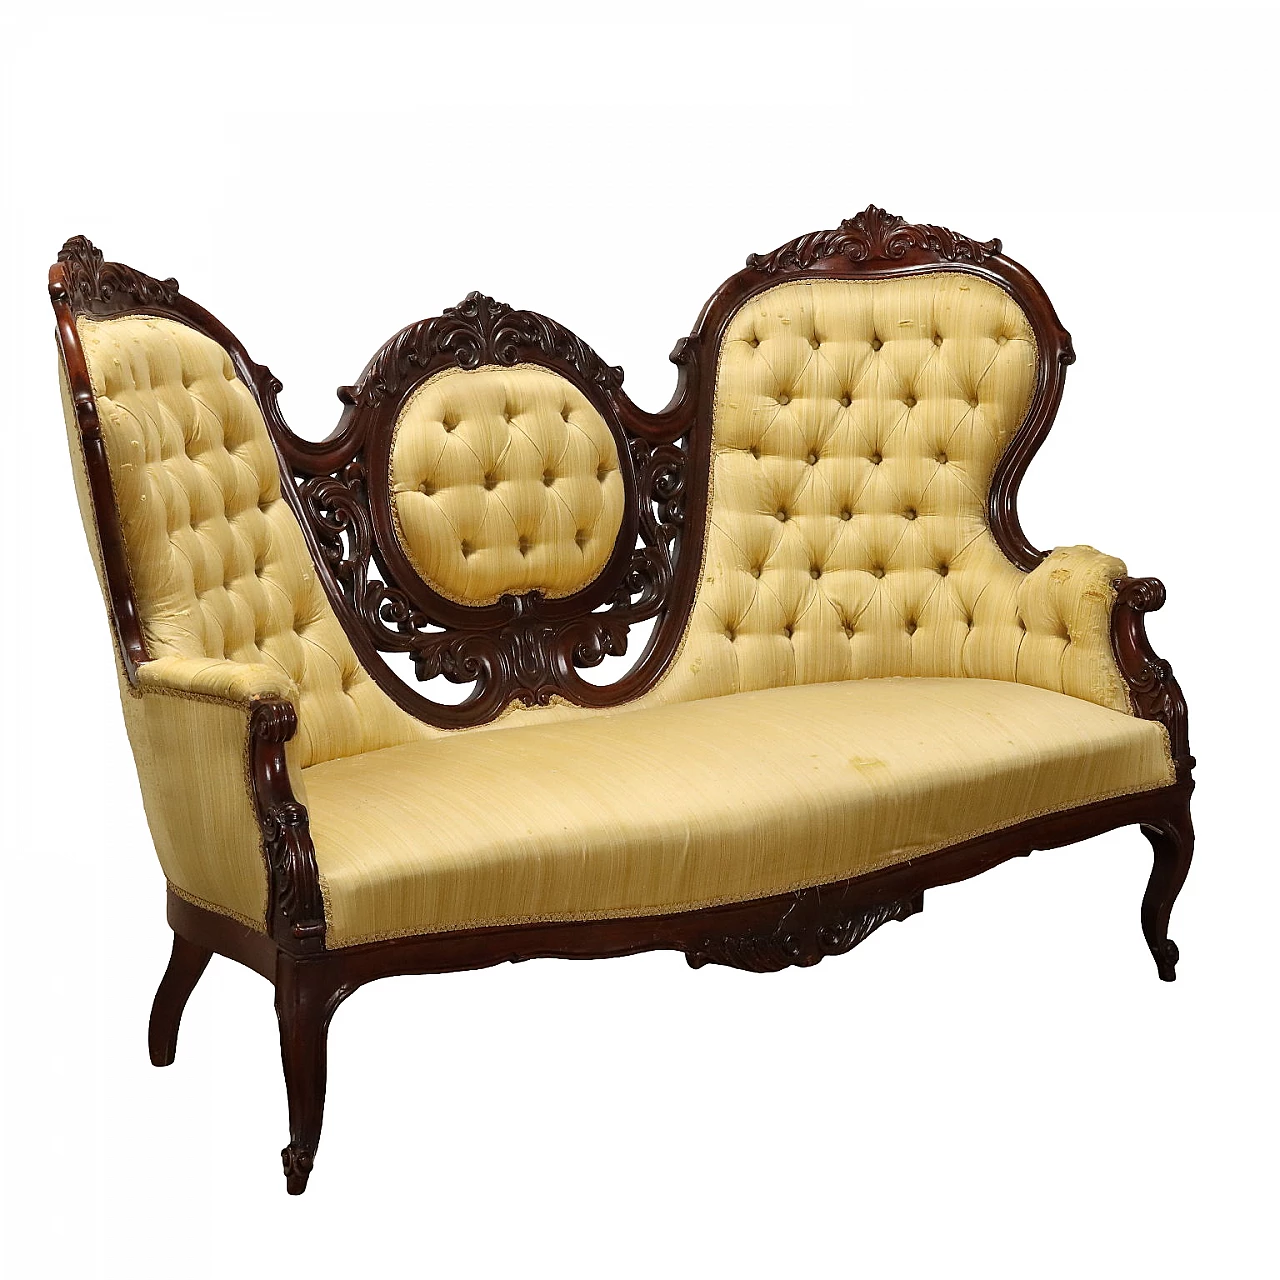 Sofa in mahogany and capitonné with wavy legs, 19th century 1